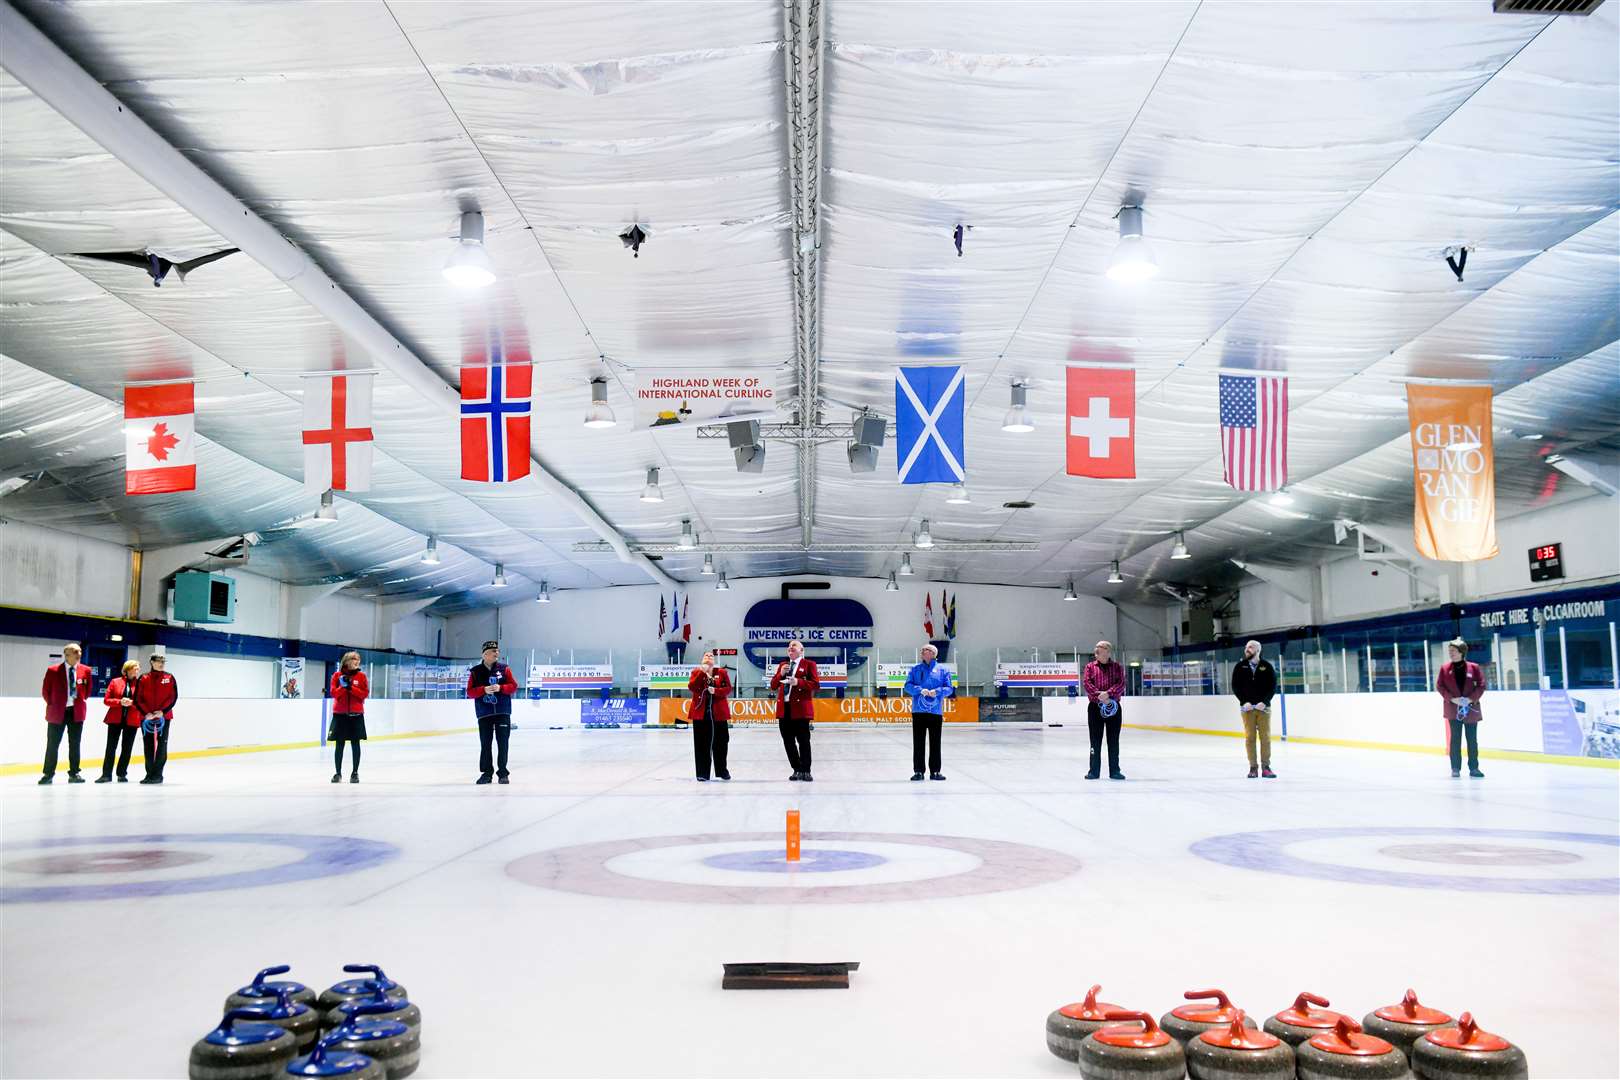 Opening ceremony of Highland Week of International Curling.